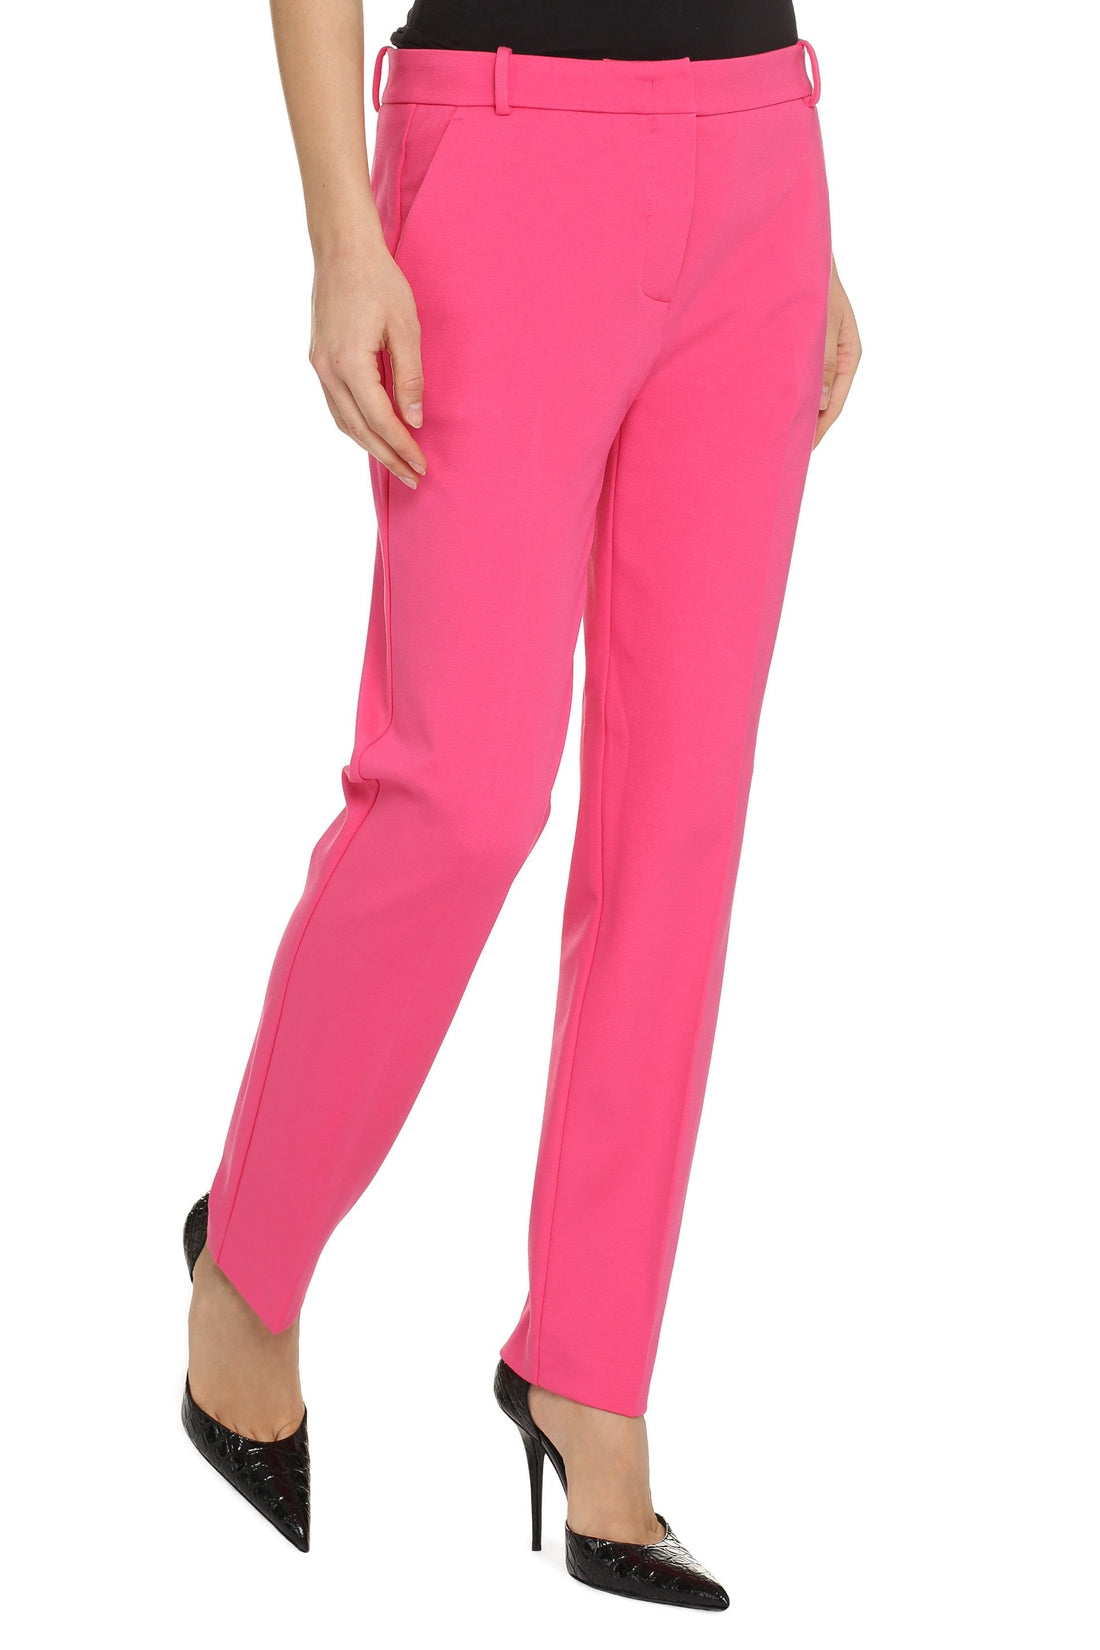 Pinko-OUTLET-SALE-Technical fabric pants-ARCHIVIST